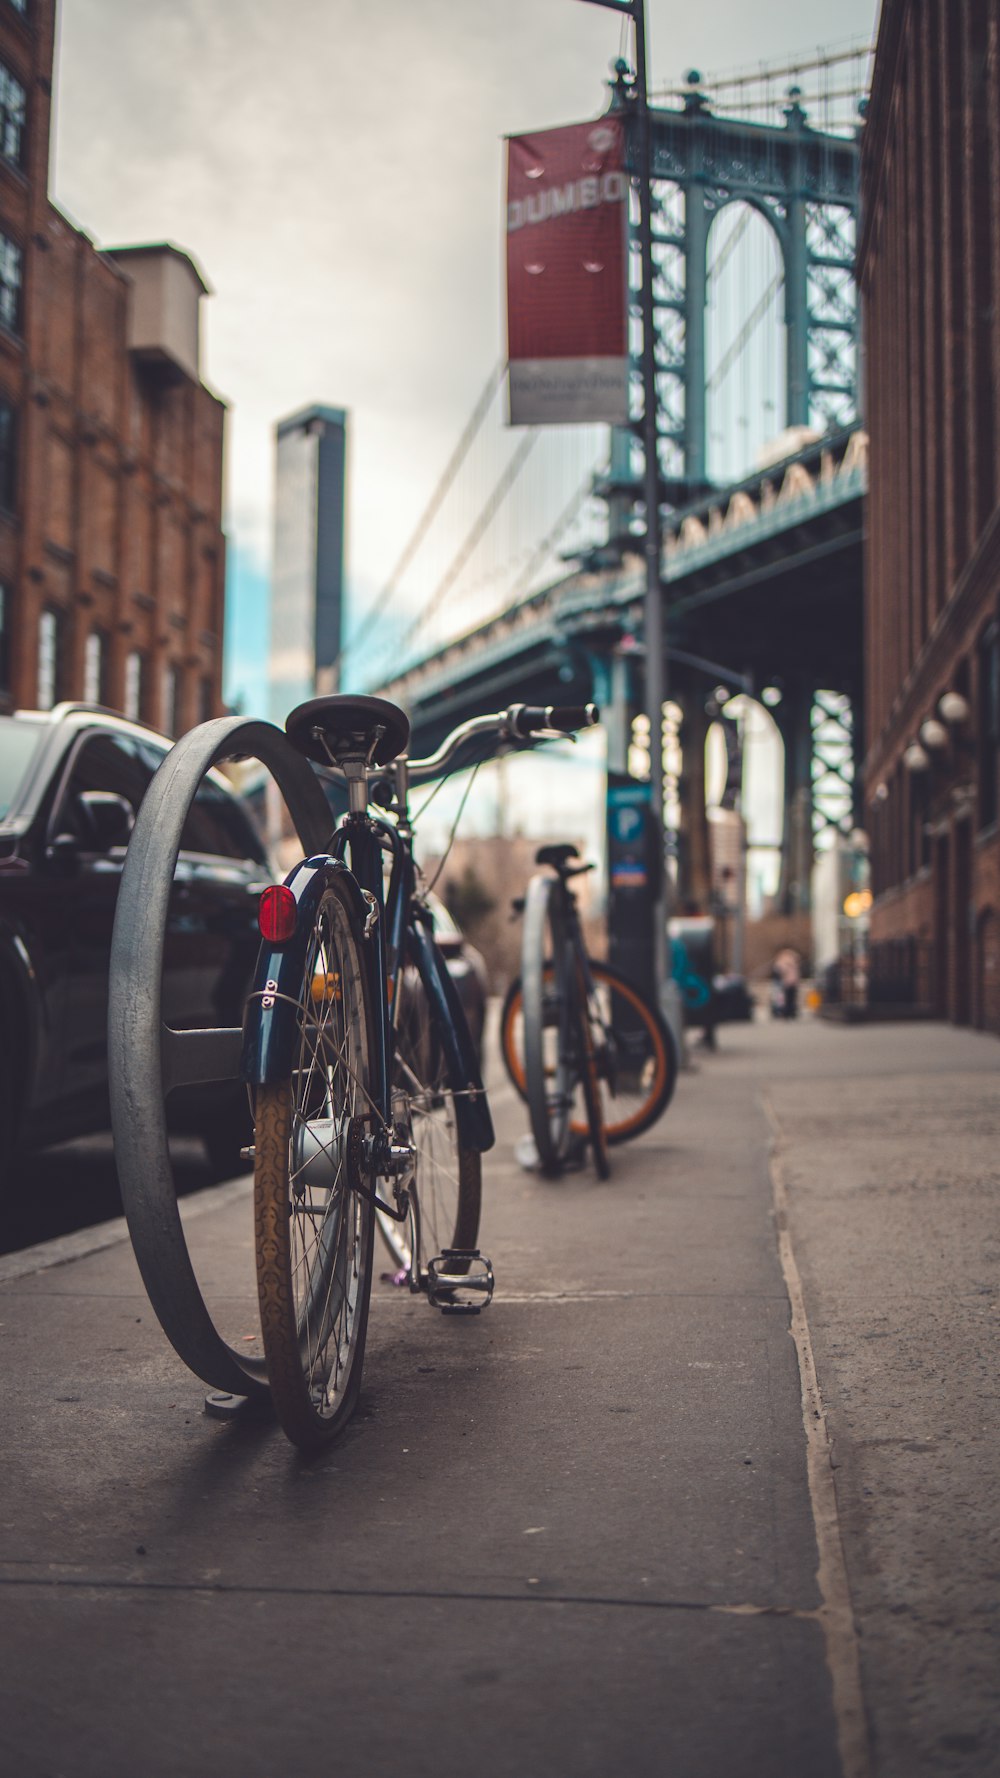 black city bike parked on sidewalk during daytime